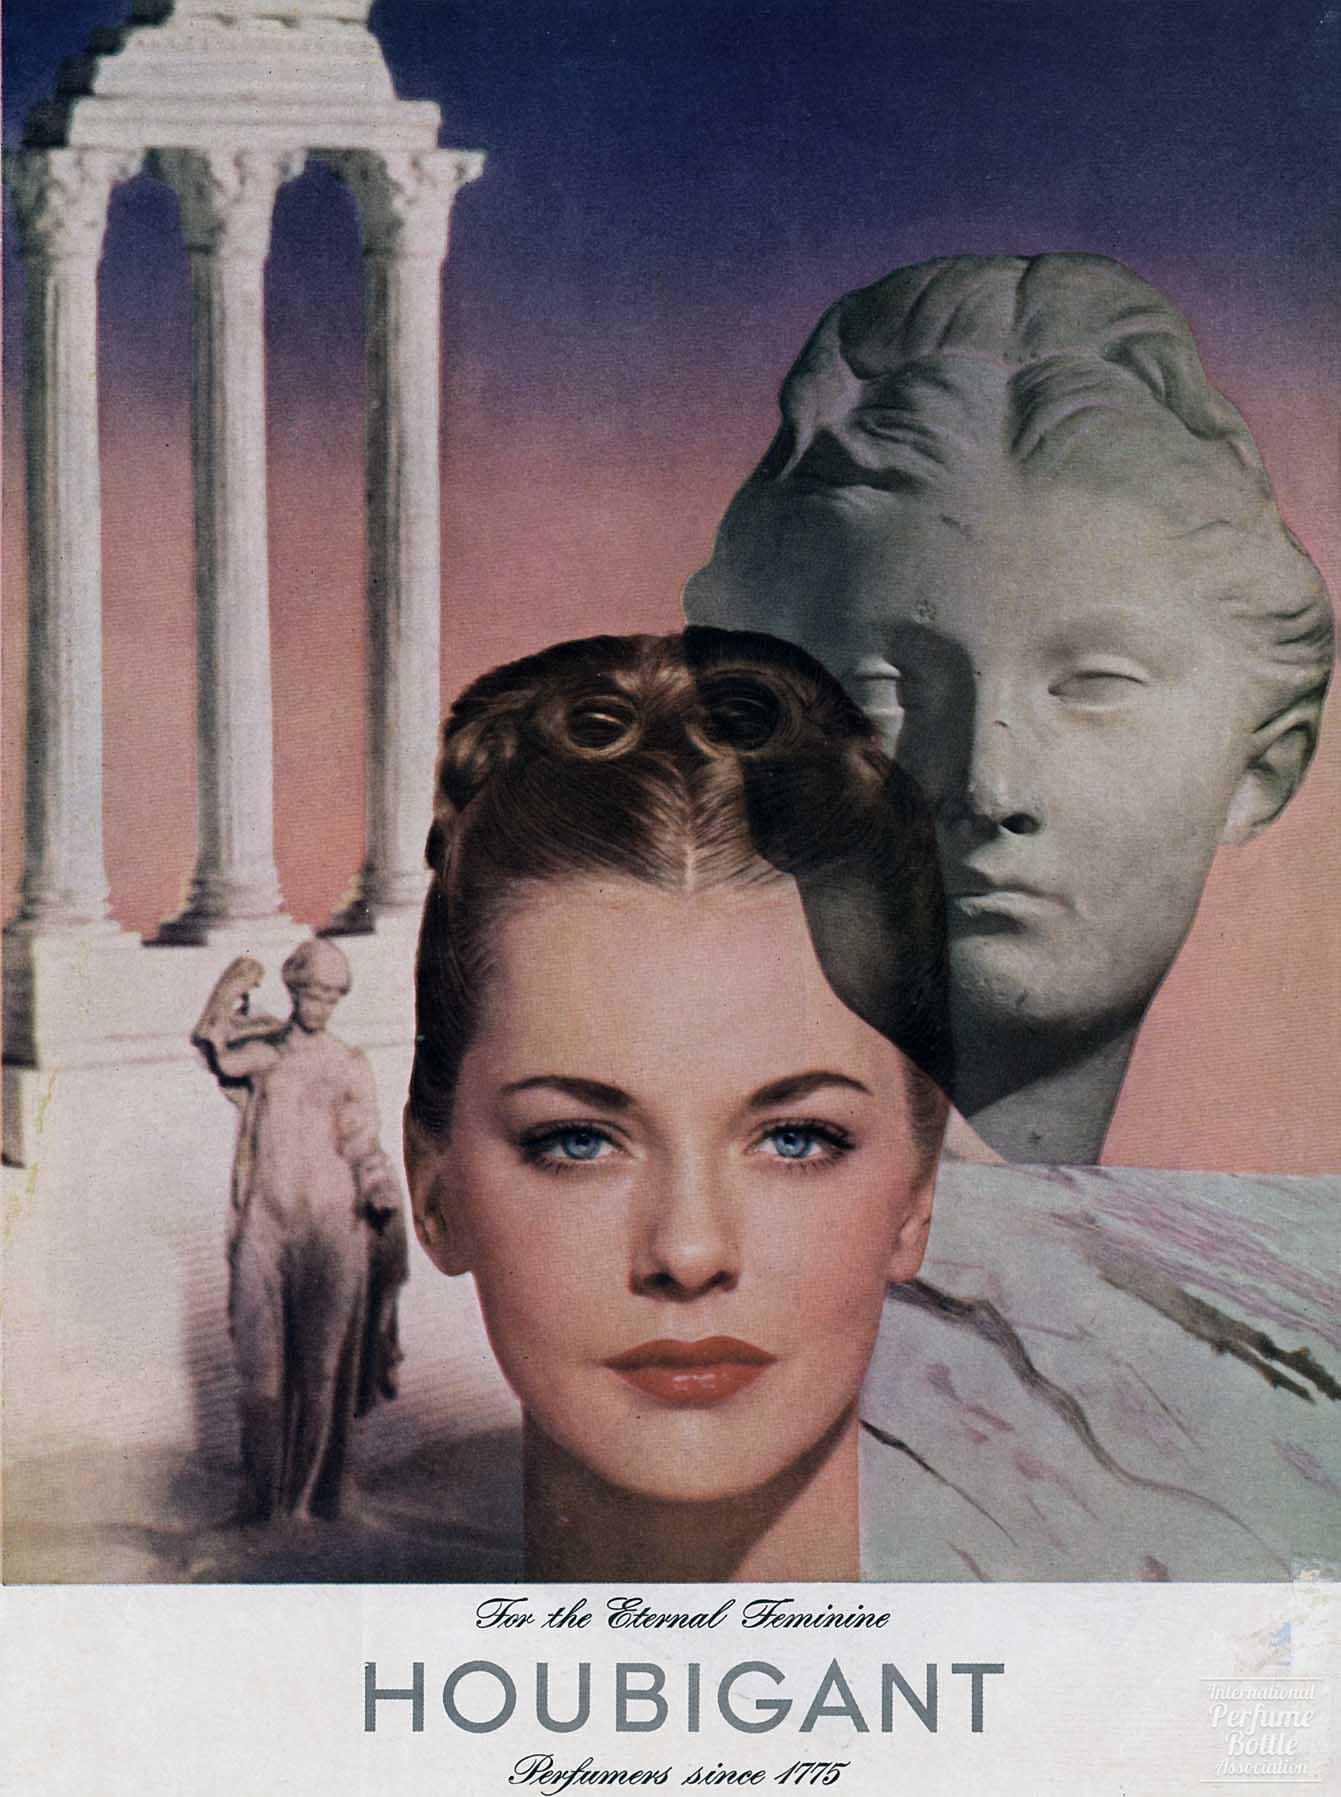 Perfumes by Houbigant Advertisement - 1947